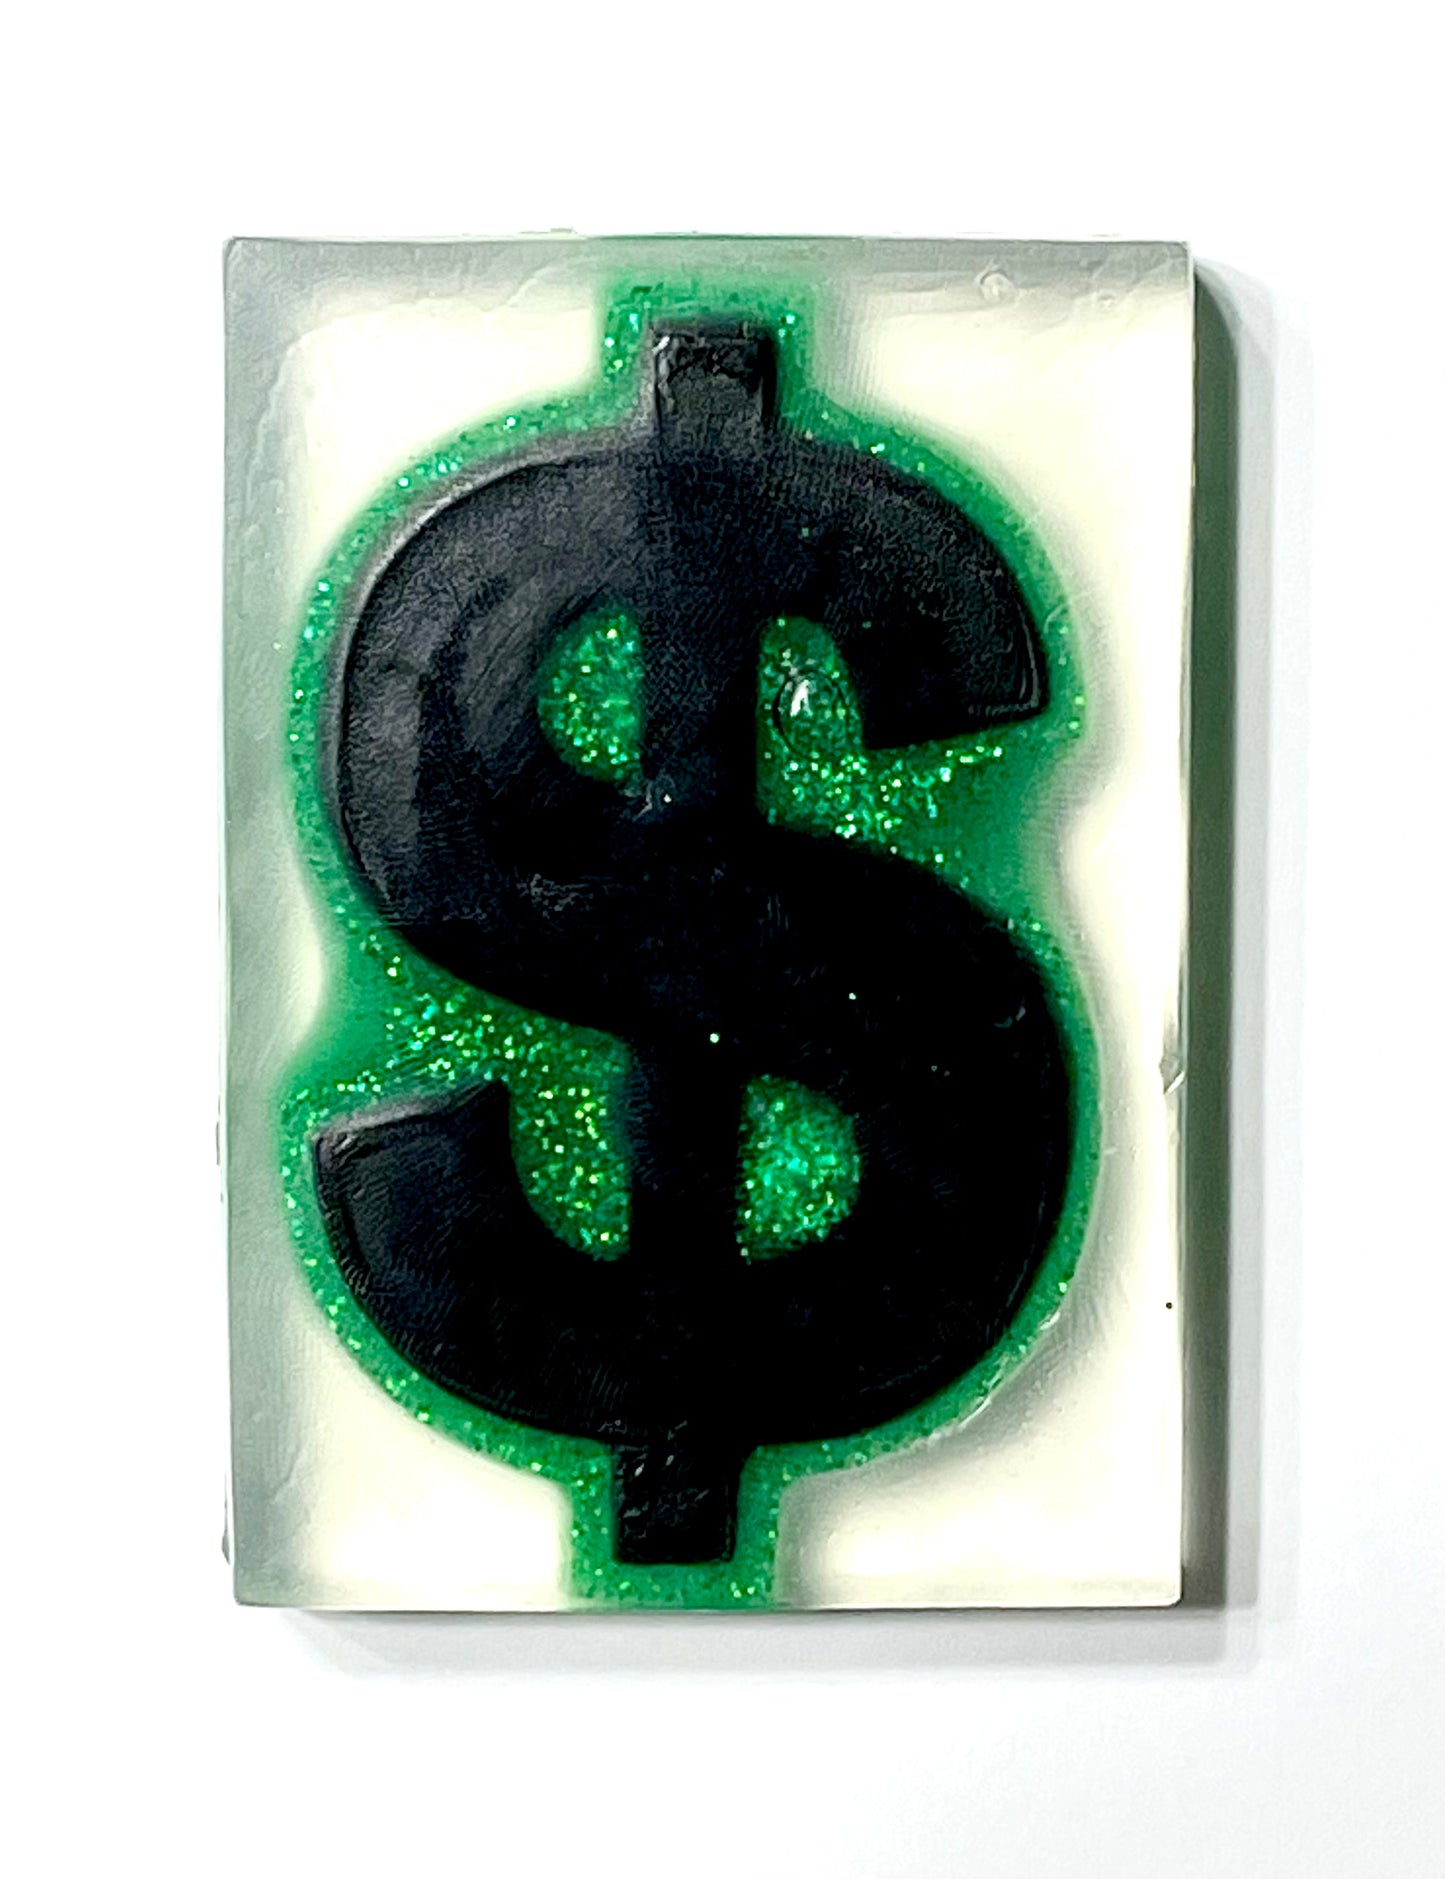 Patchouli "Money Manifesting" Charcoal Soap